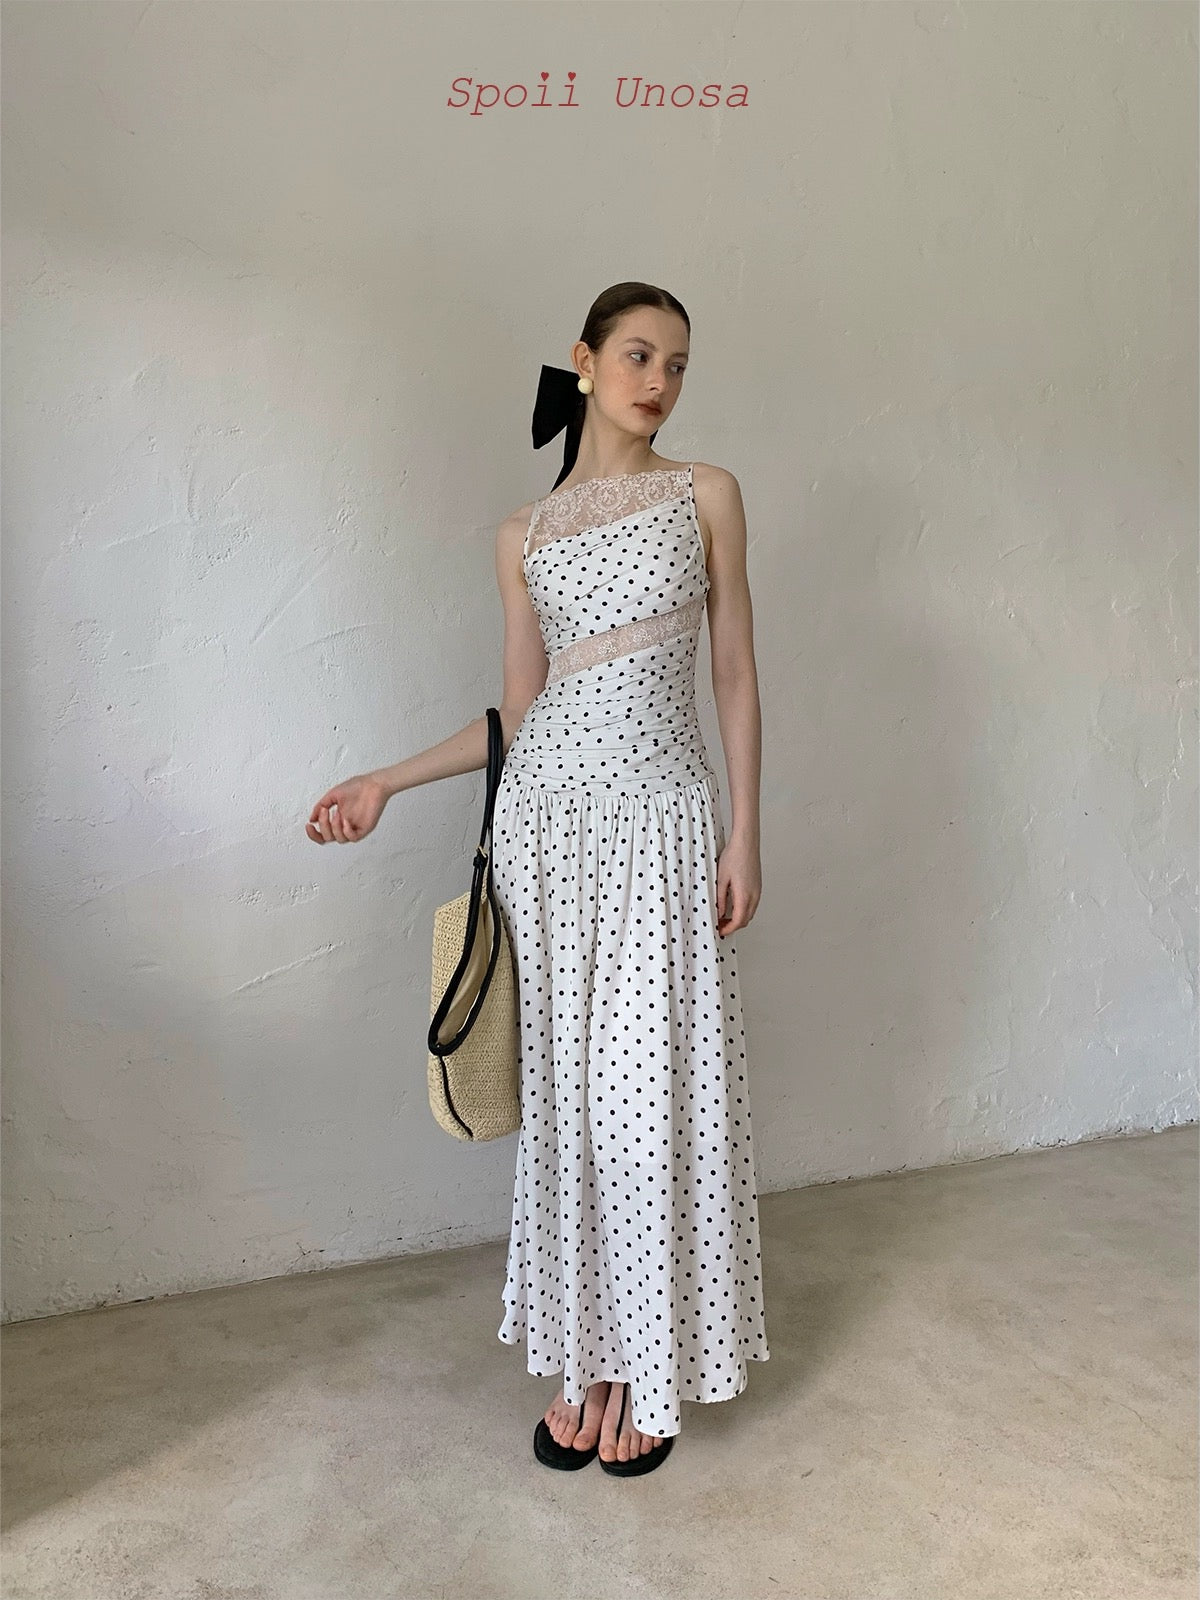 Spoii Unosa.Original Design French Polka Dot Lace Dress